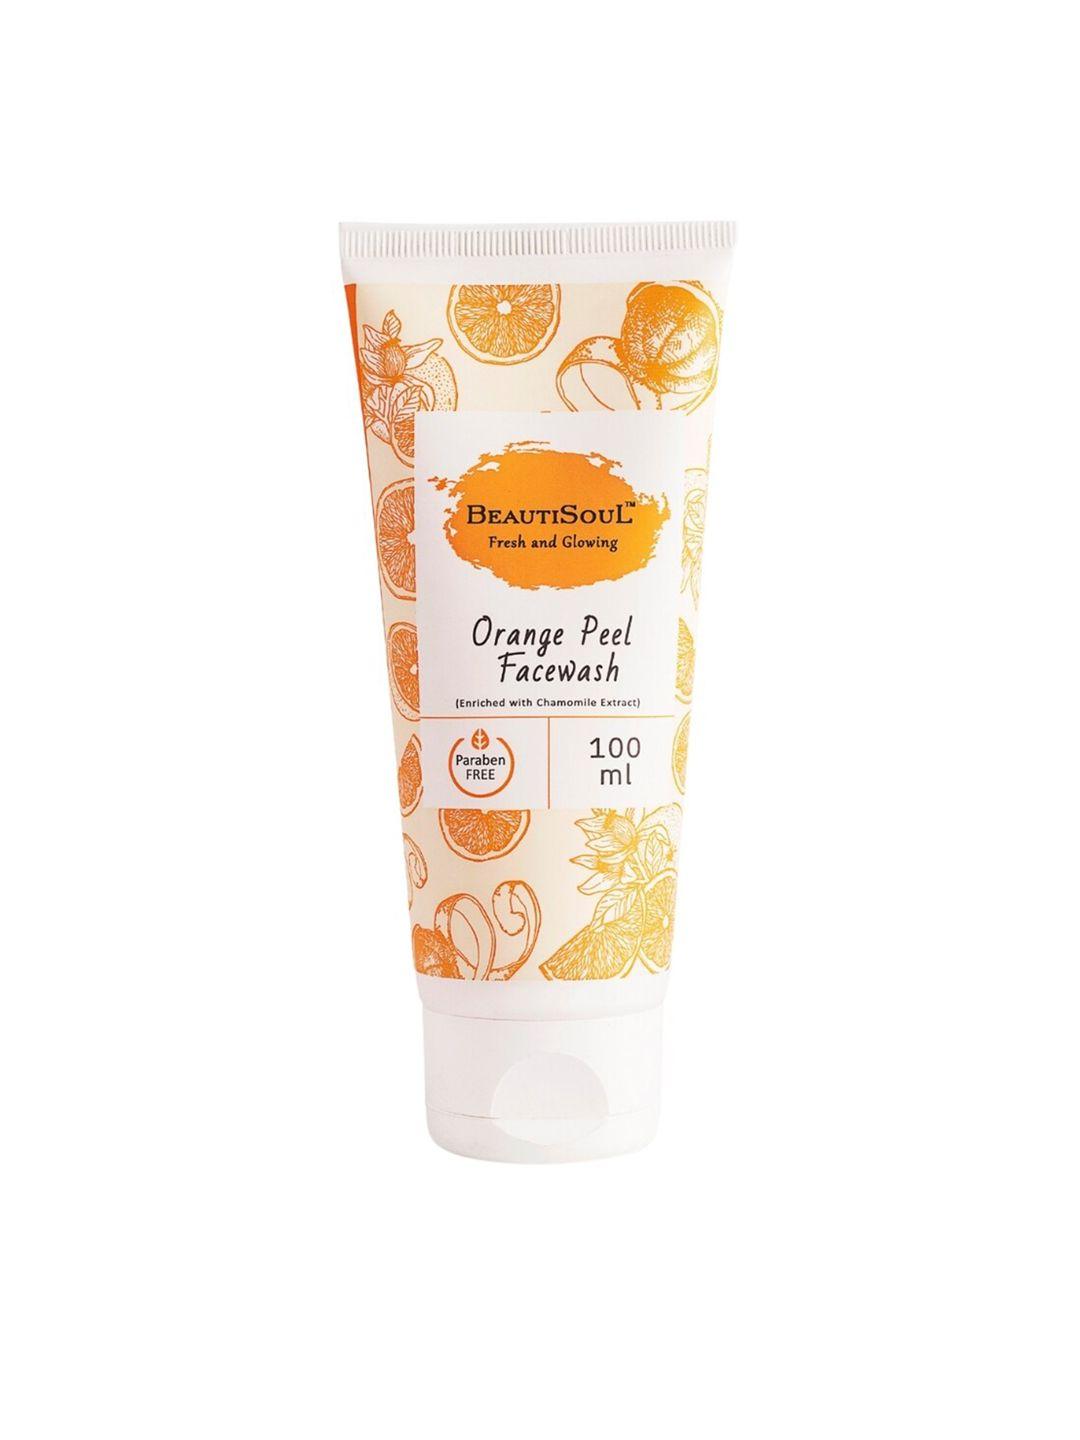 beautisoul orange peel face wash with chamomile and aloe vera 100 ml